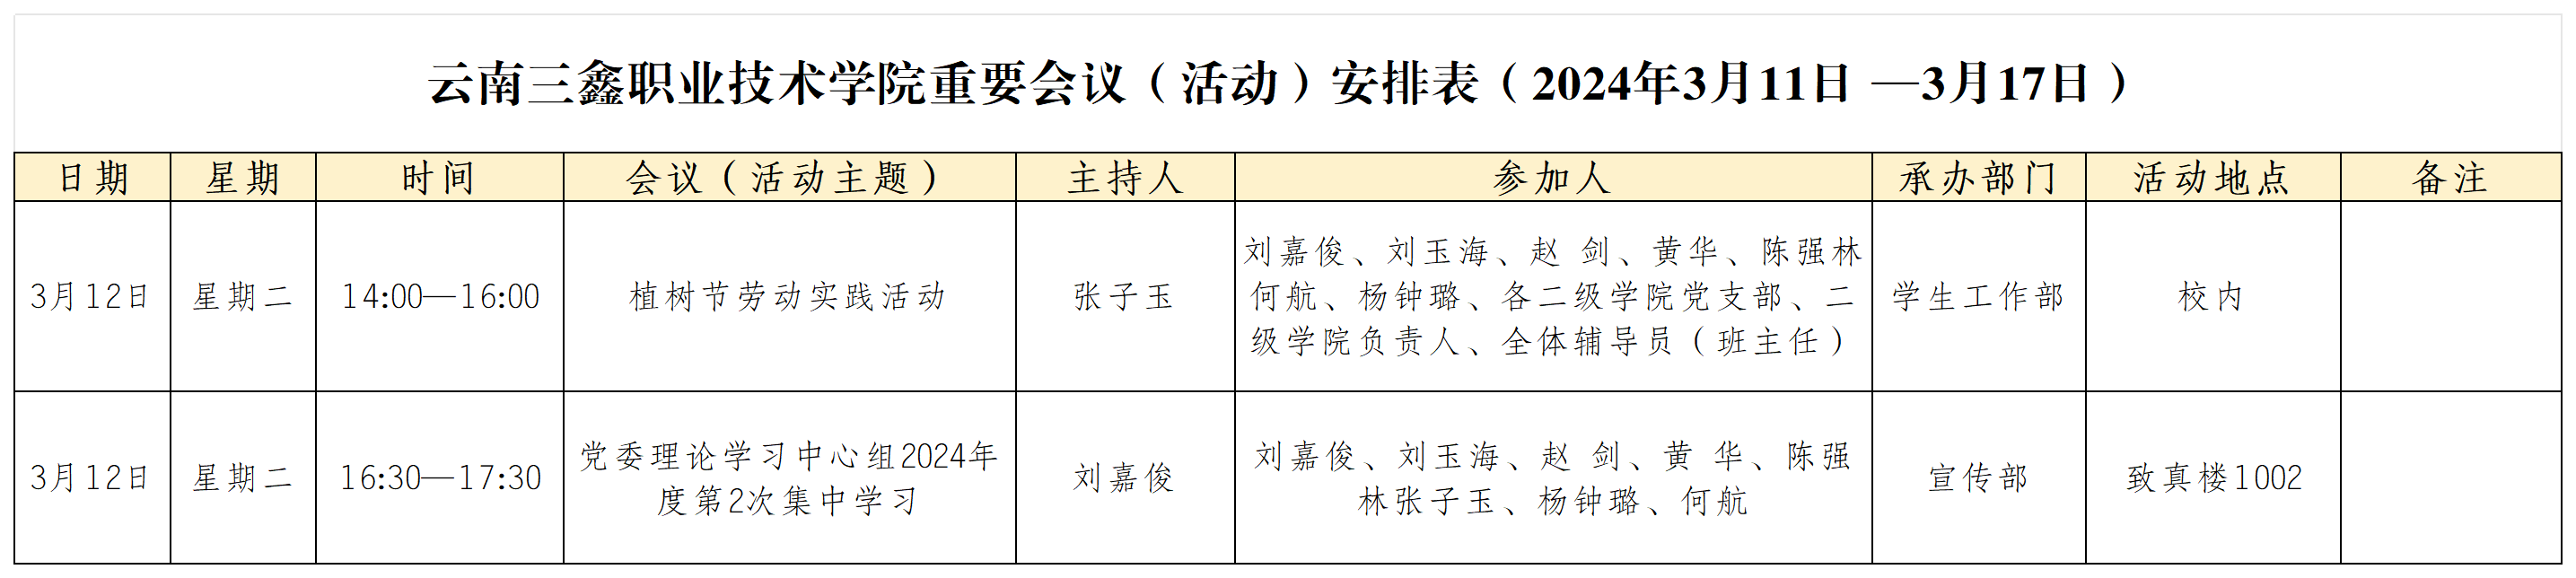 web天游线路检测中心重要会议（活动）安排表（2024年3月11日 —3月17日）